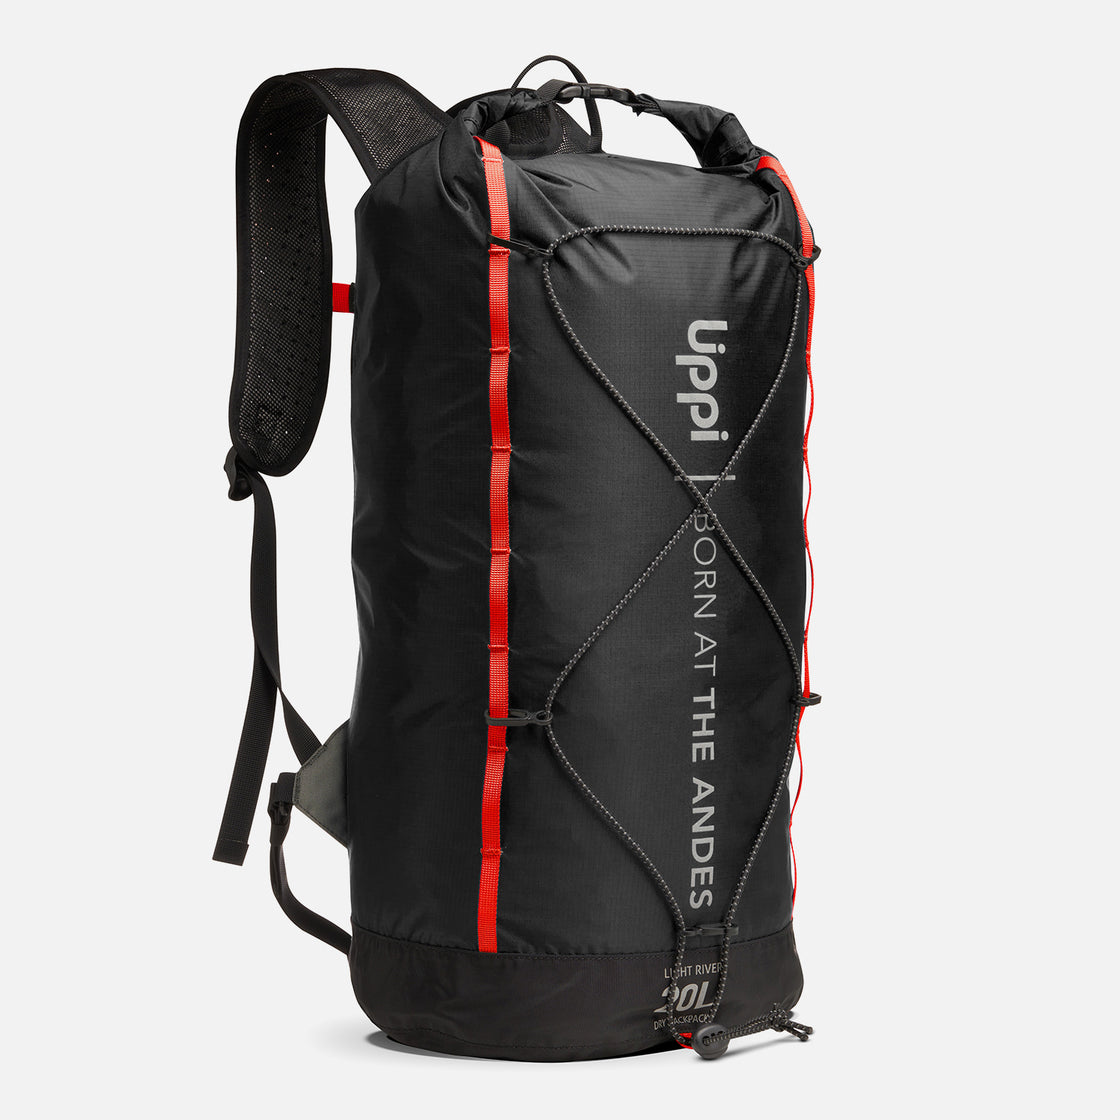 Mochila Unisex Light River Backpack 20L Negro Lippi – HakaHonu